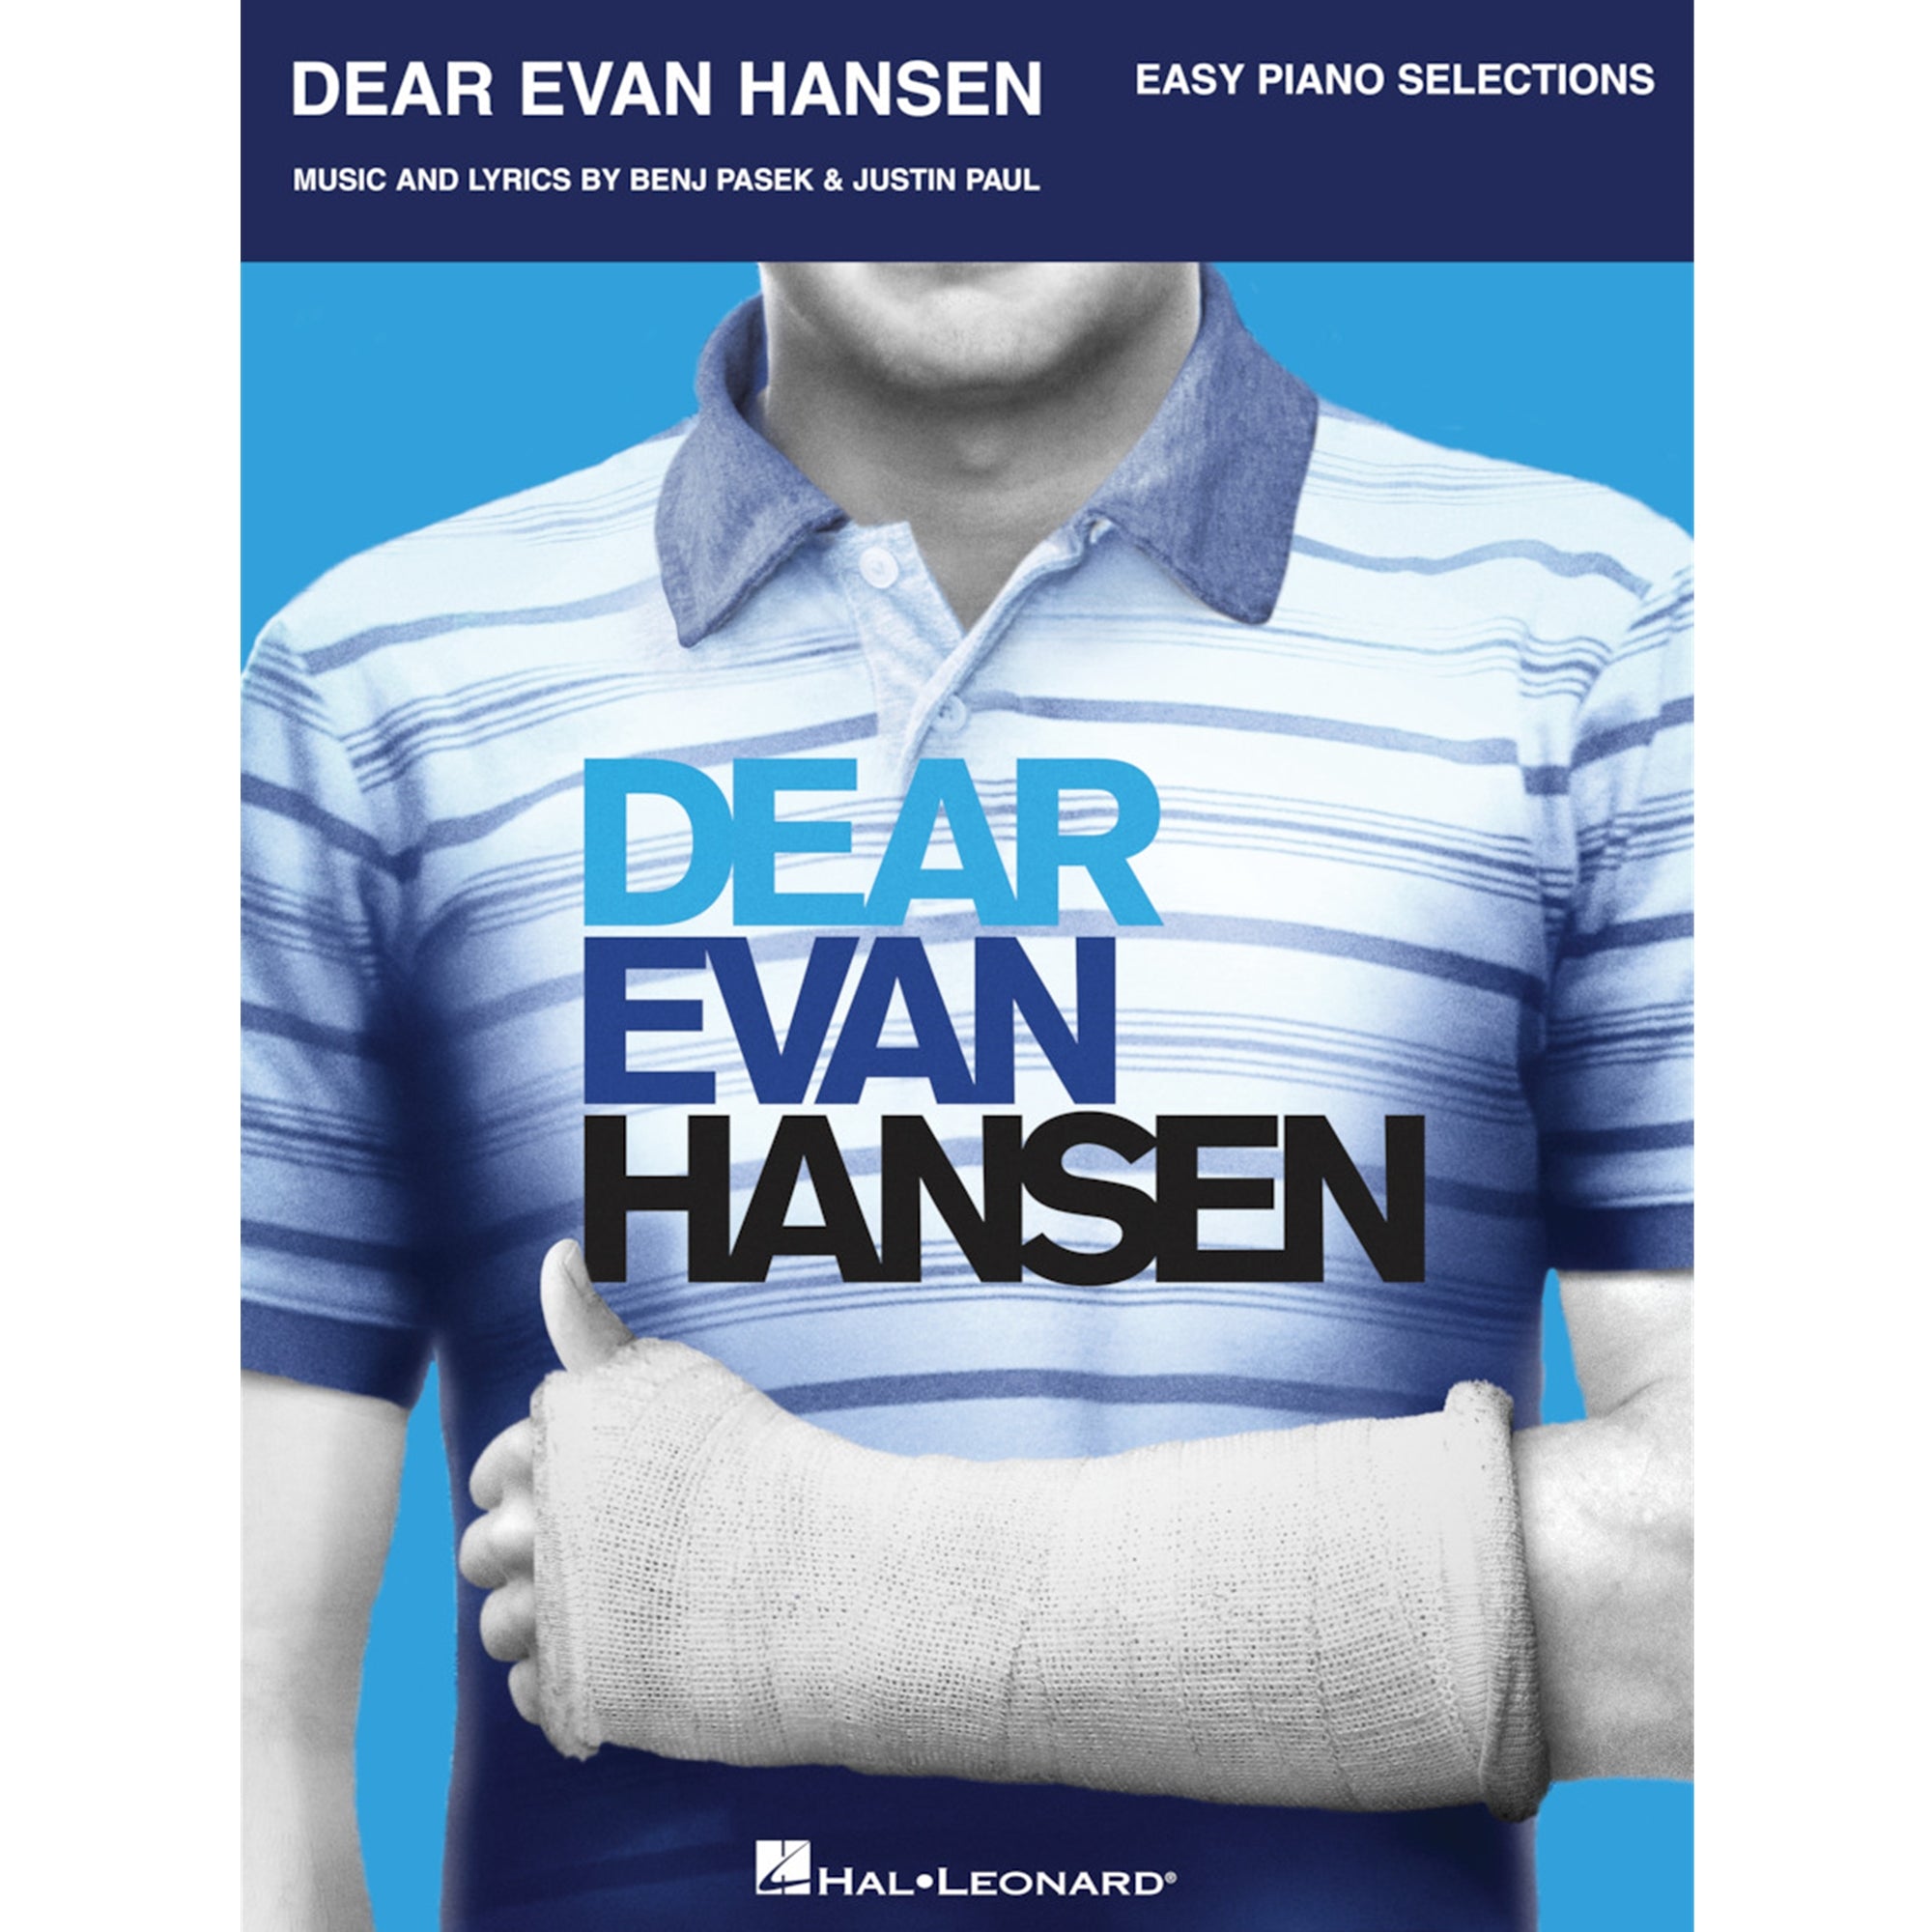 HAL LEONARD 241104 Dear Evan Hansen